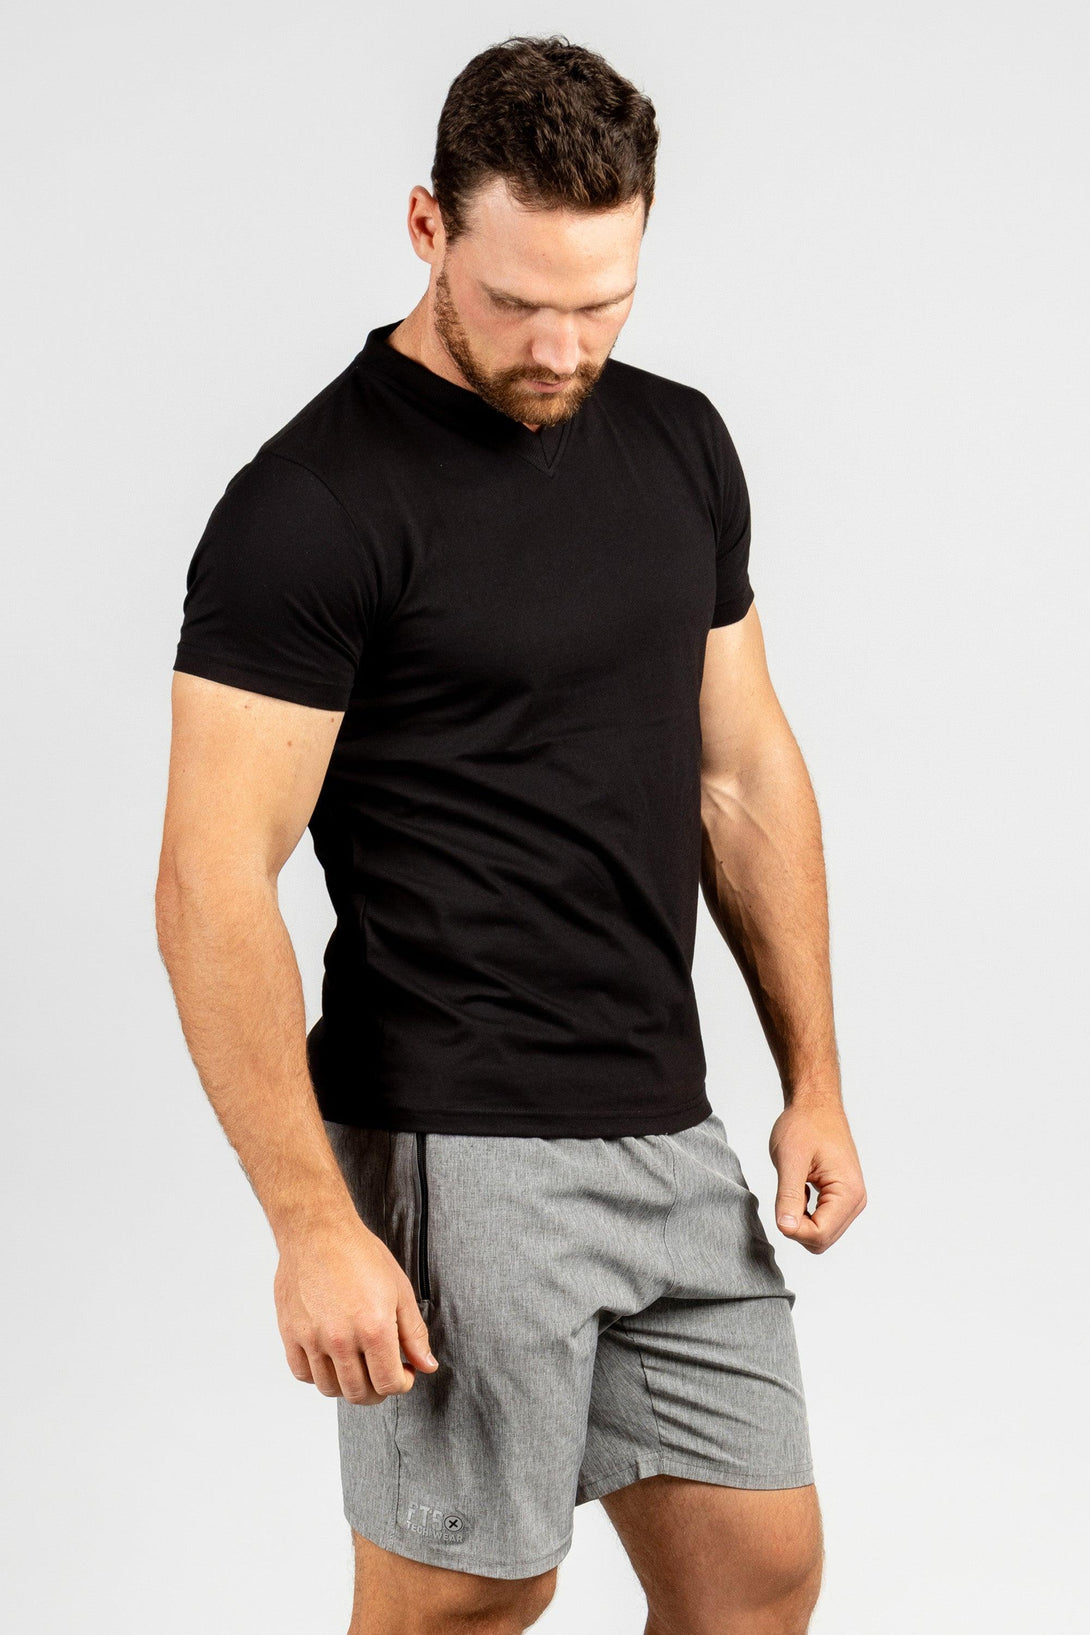 V-Neck T-Shirts | CHARCOAL - WHITE - BLACK - Pack of 6 - FTS